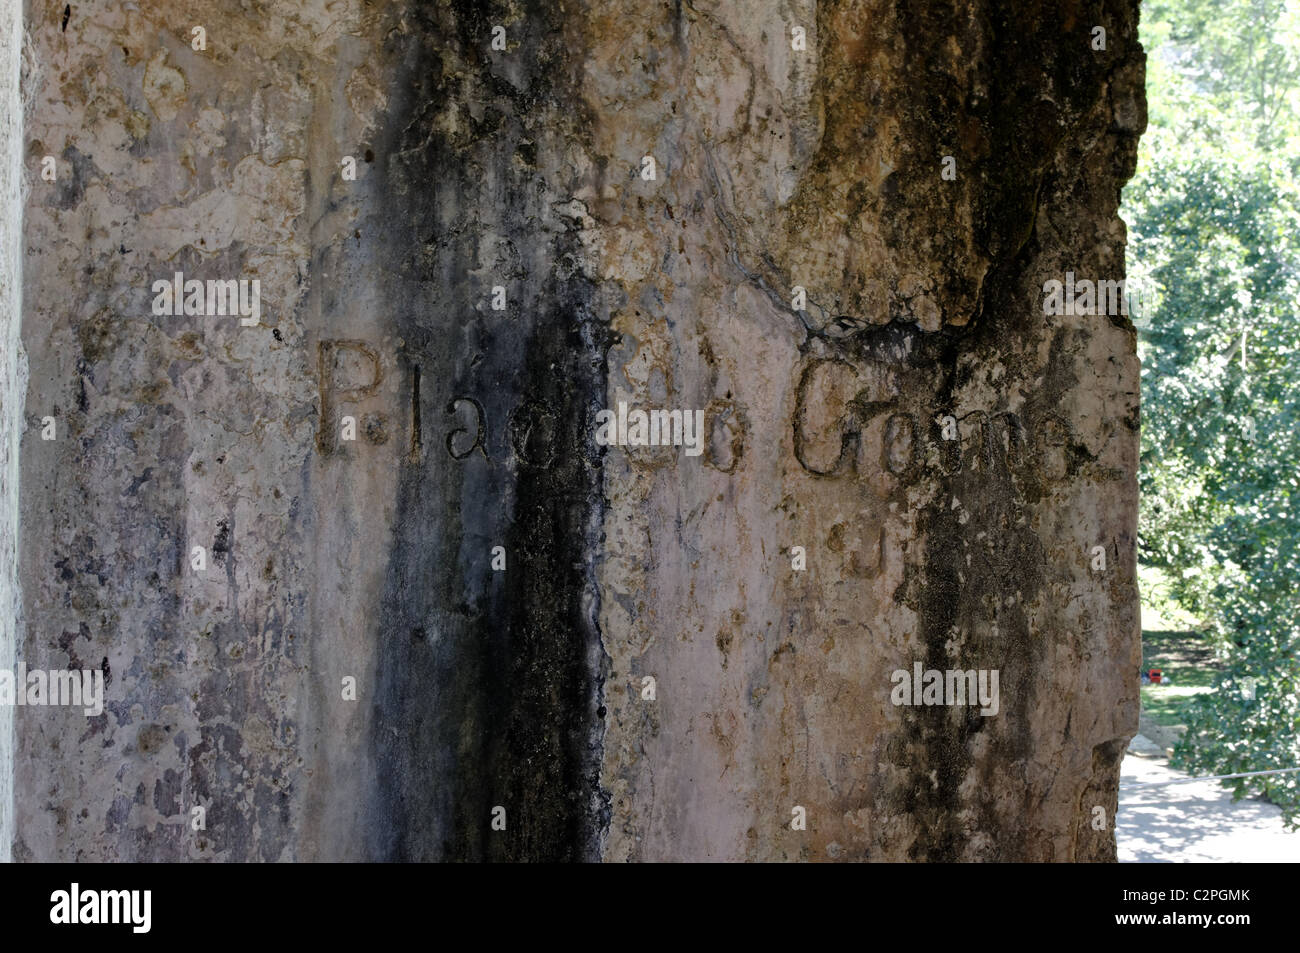 Ancient Spanish graffiti found in the Palenque ruins, it reads 'Placido Gomez'. Stock Photo